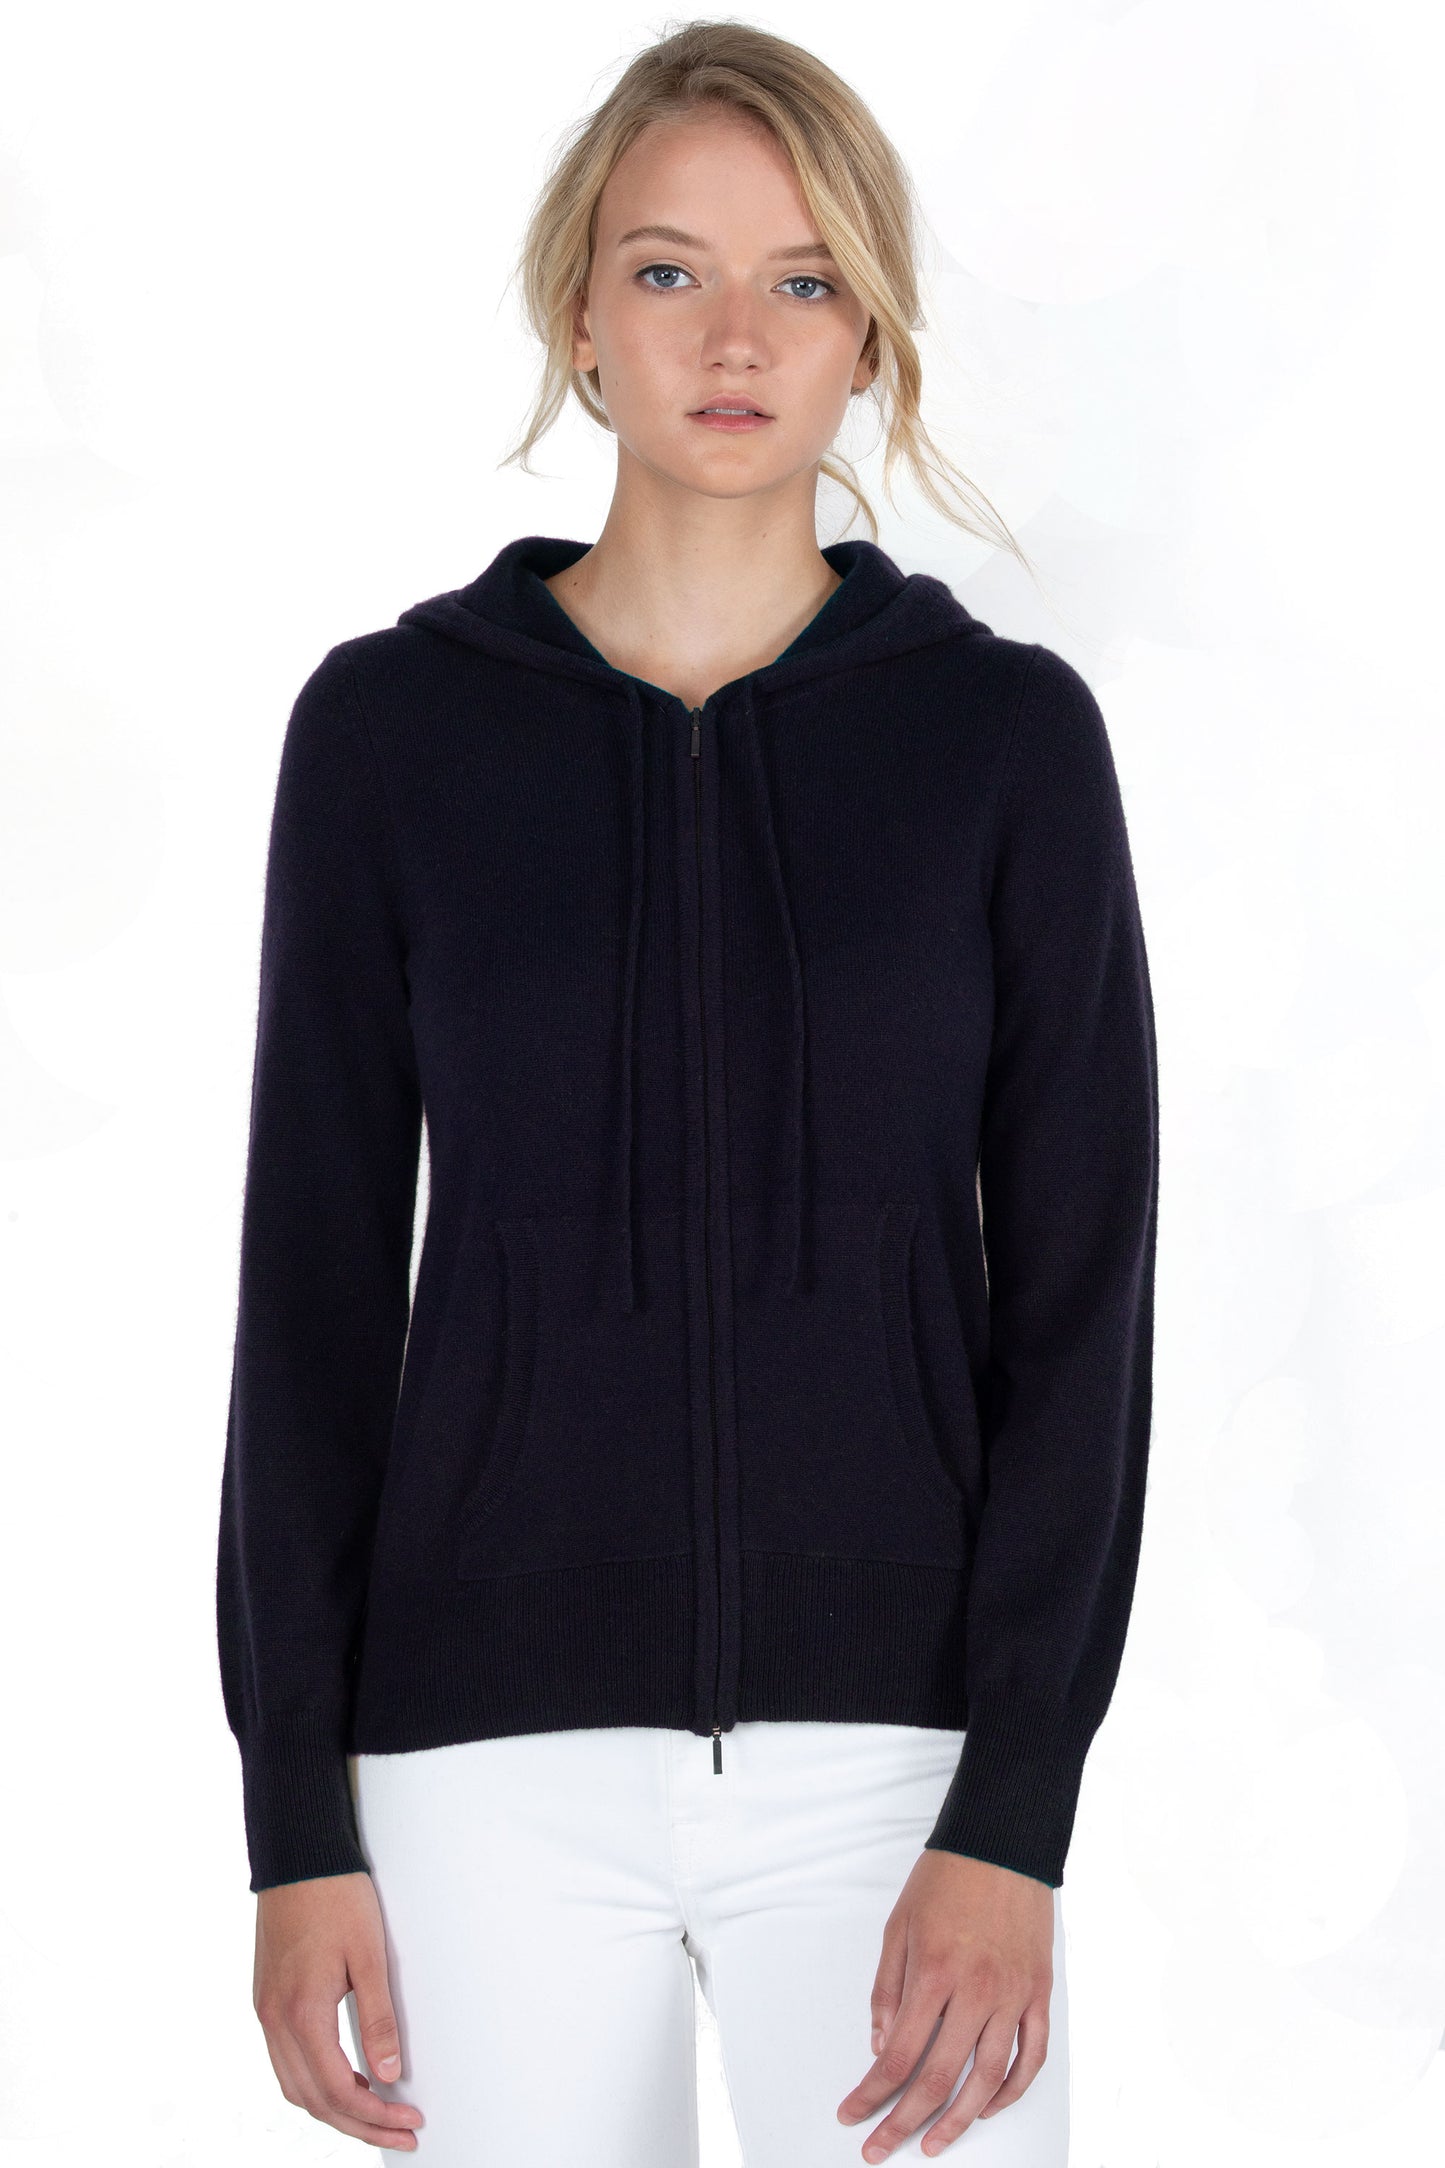 JENNIE LIU Women's 100% Pure Cashmere Long Sleeve Zip Hoodie Cardigan Sweater